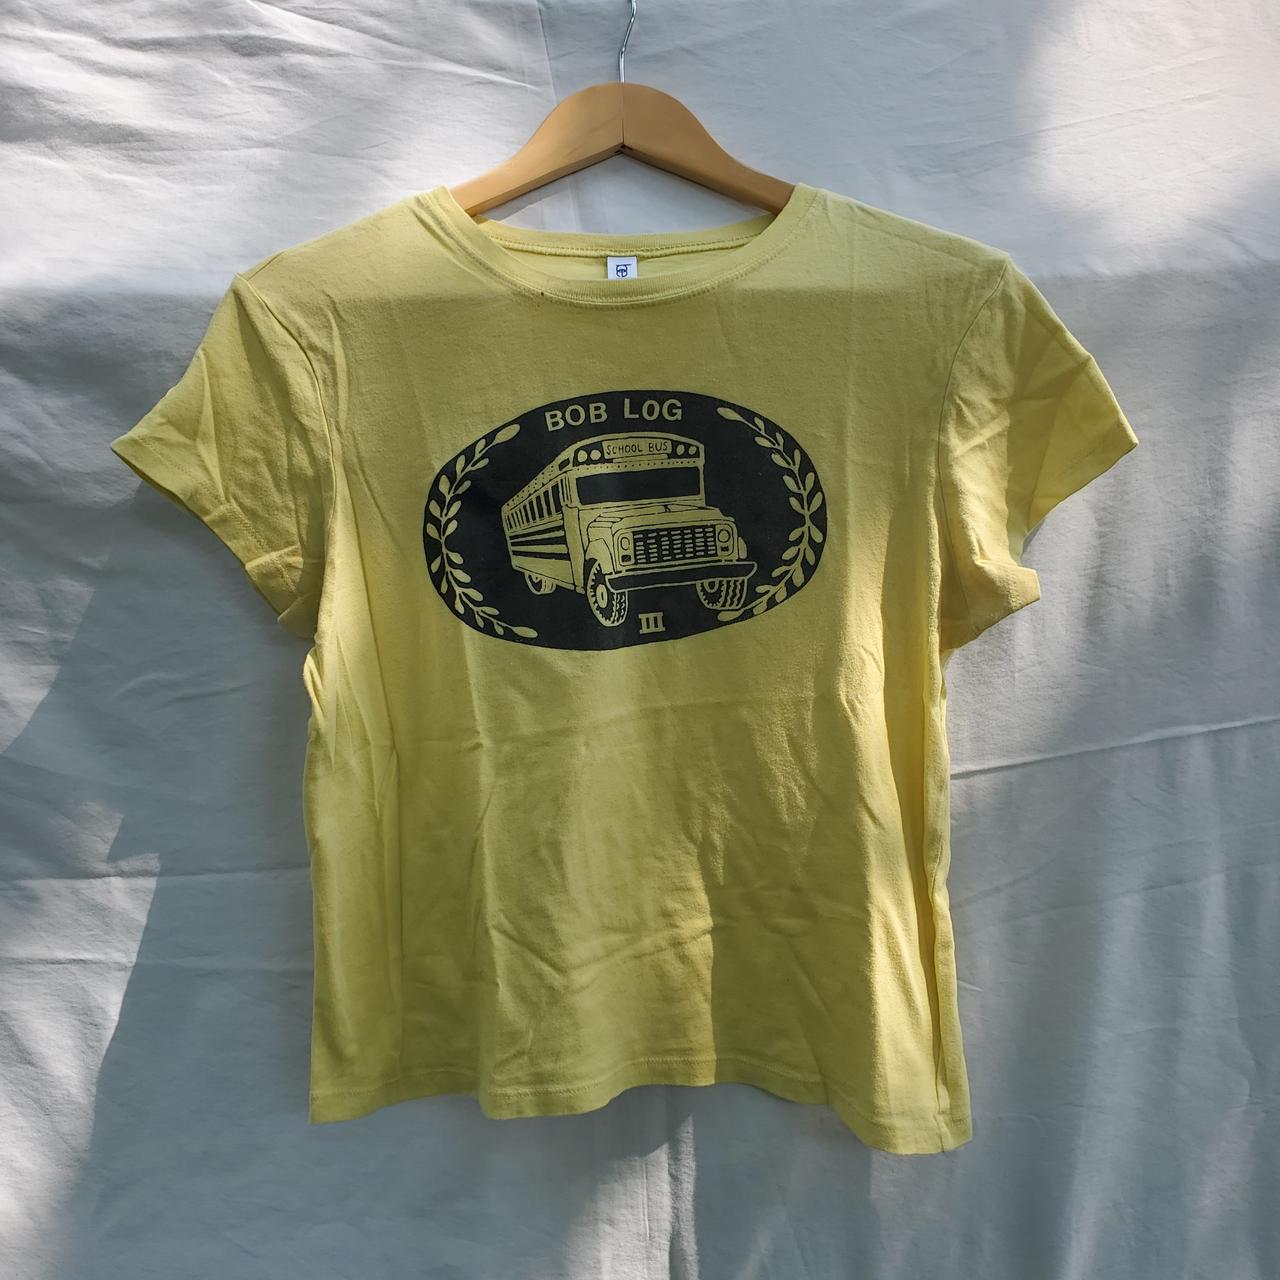  Retro Yellow Boston T-Shirt : ביגוד, נעליים ותכשיטים